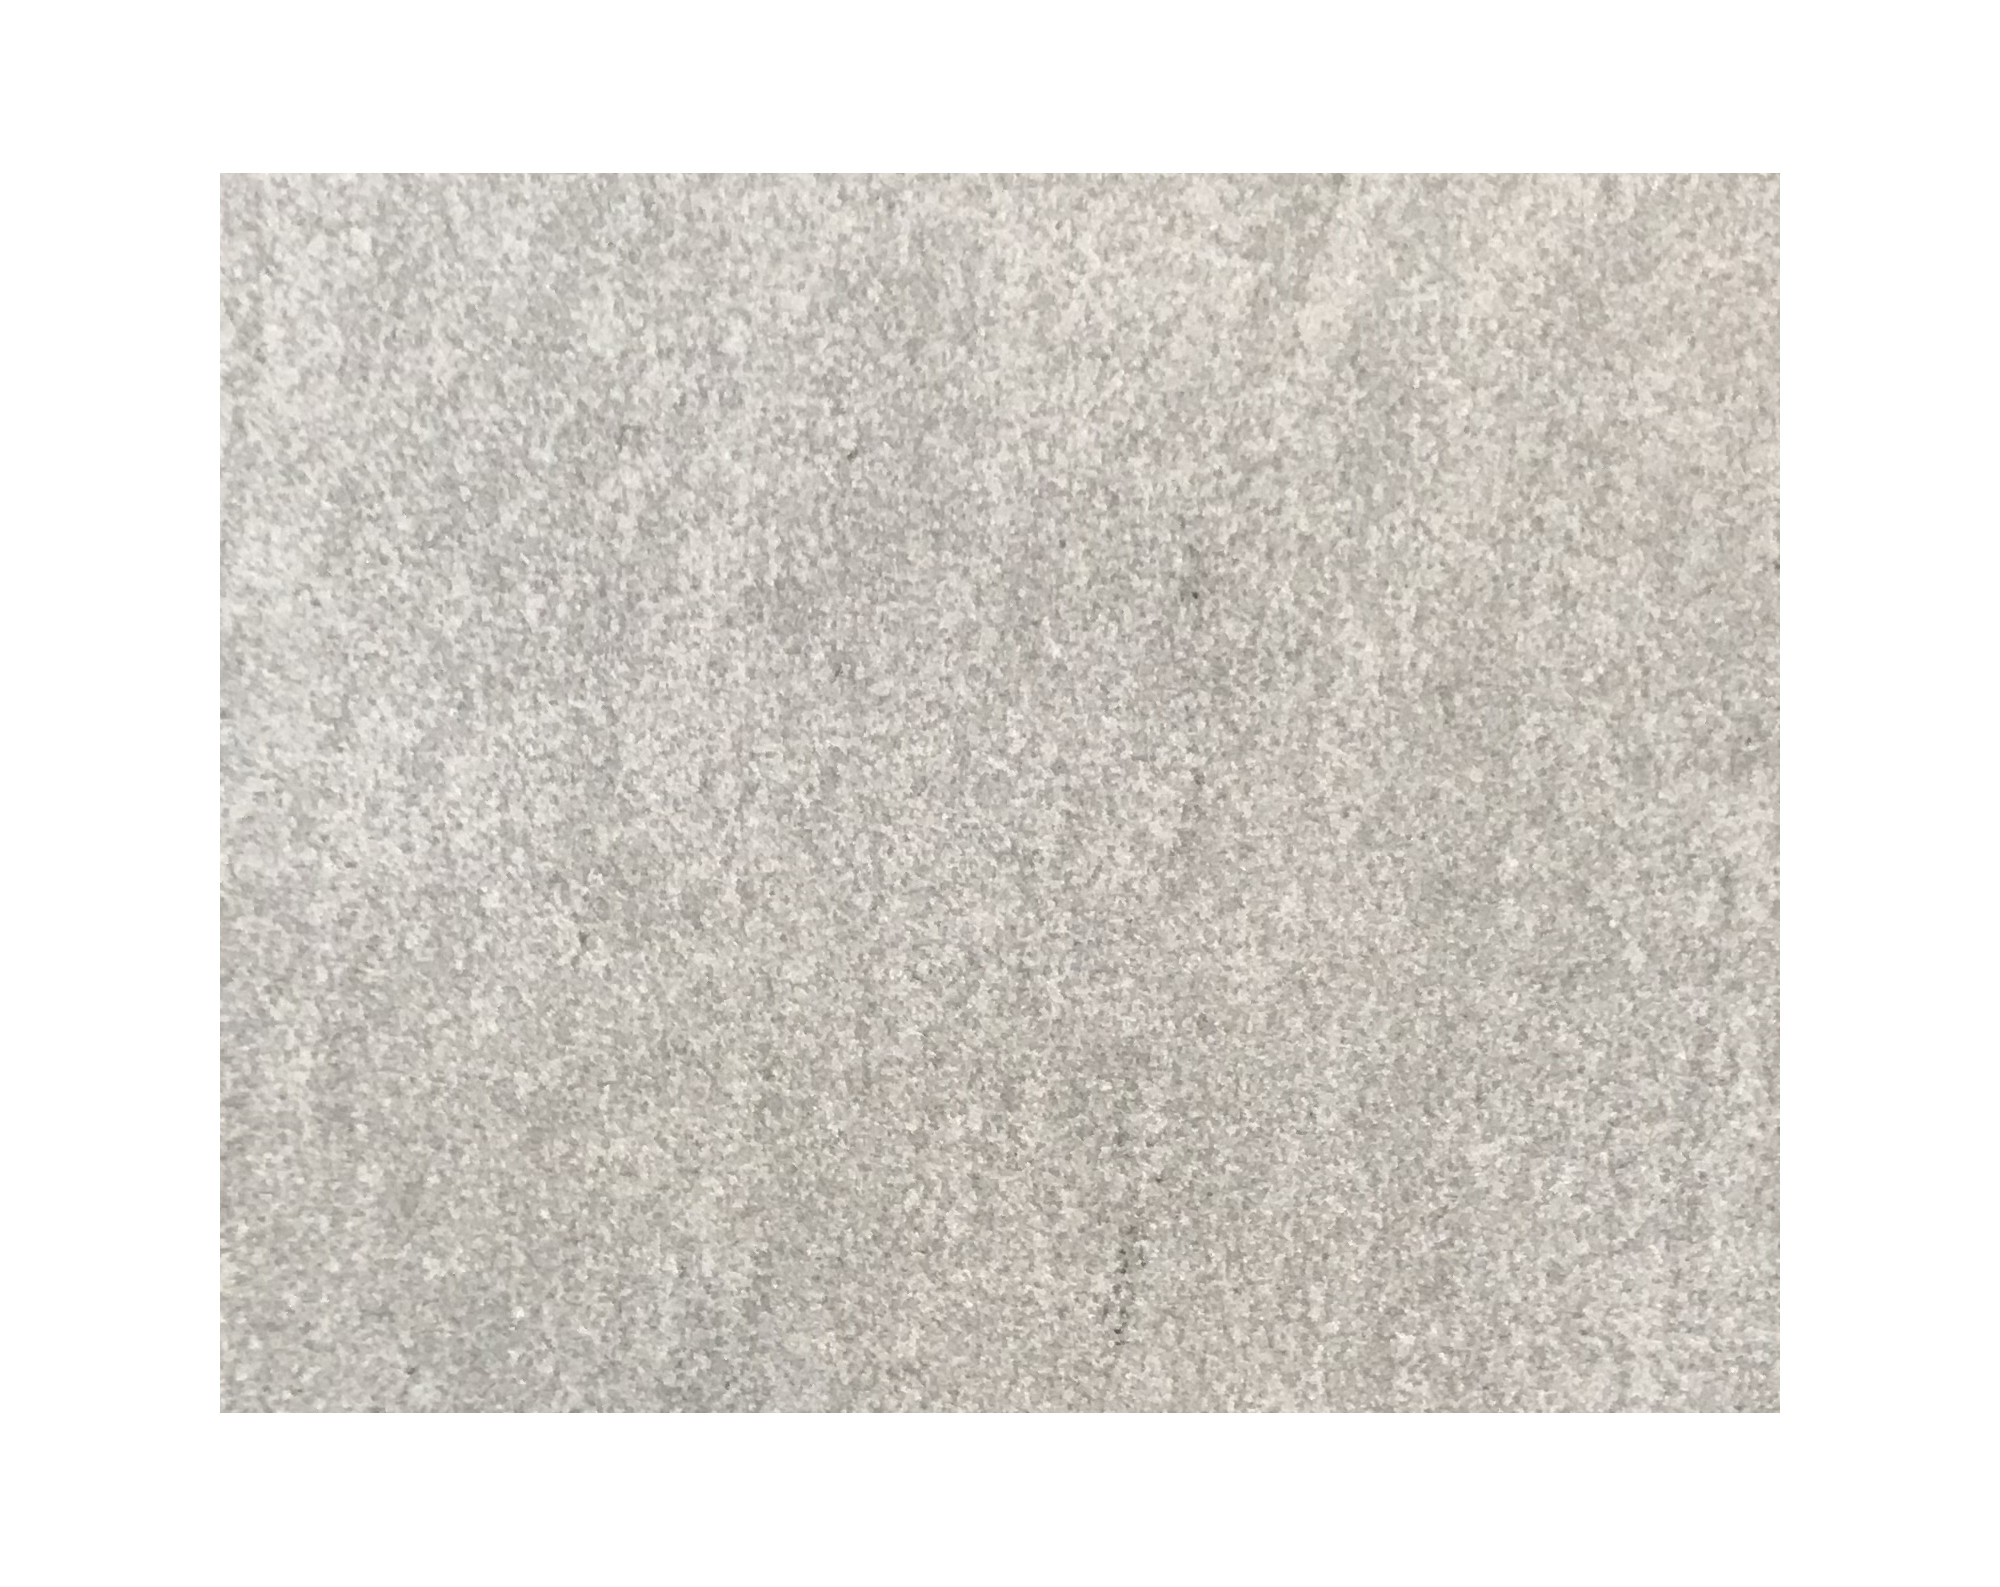 Harmo roc maranelloset, keramiek-serie, rond d:6,00m, zand grijs, keramisch porselein